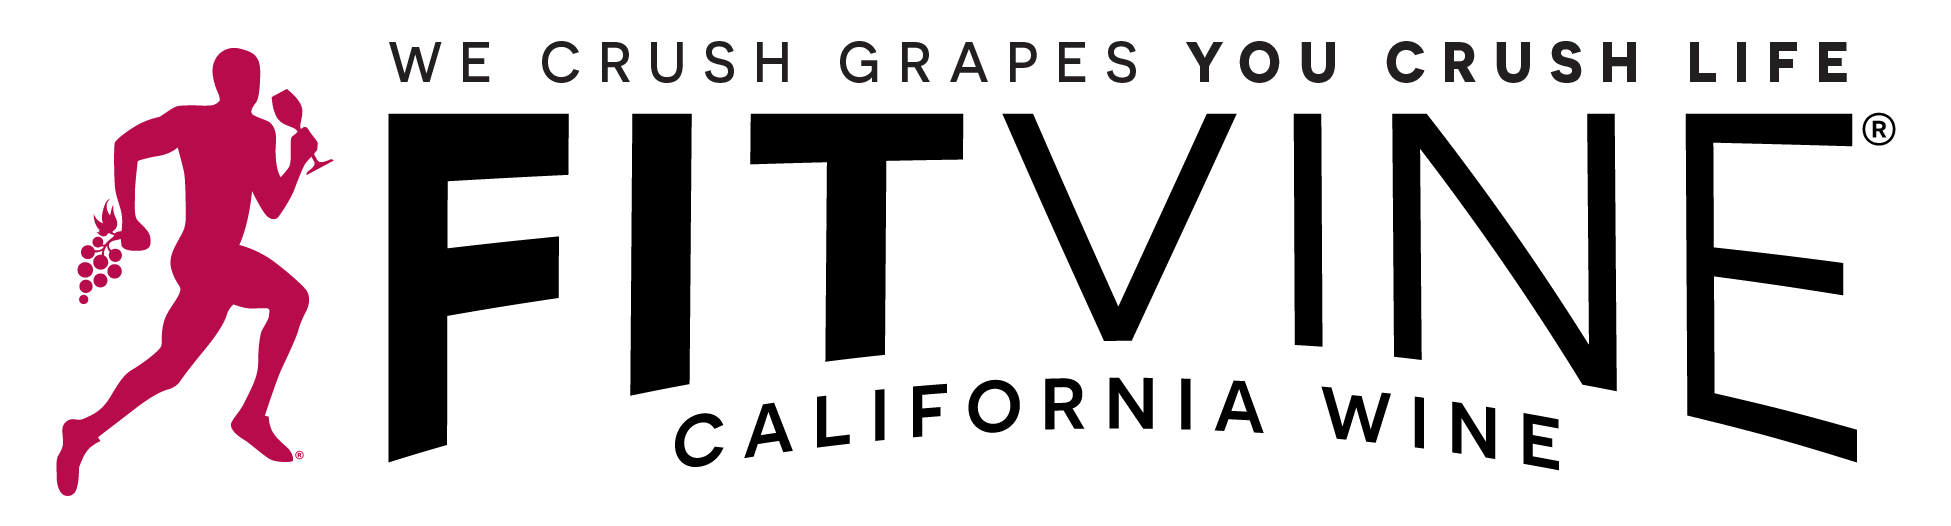 FitVine Wine - We Crush Grapes, You Crush Life